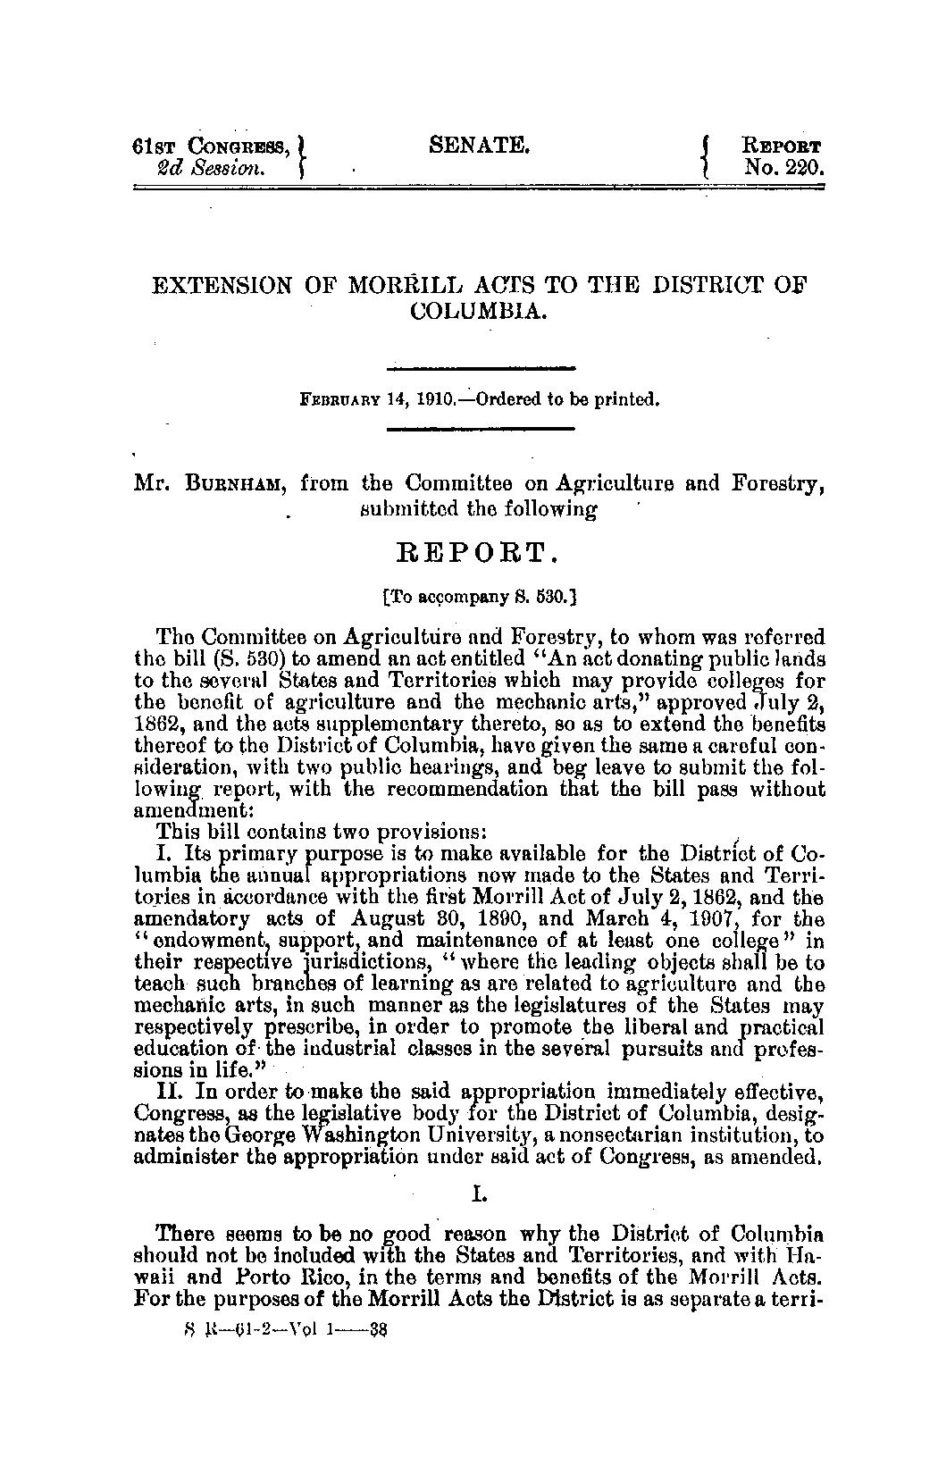 Report on Morrill Act Extension of 1910, Legislation